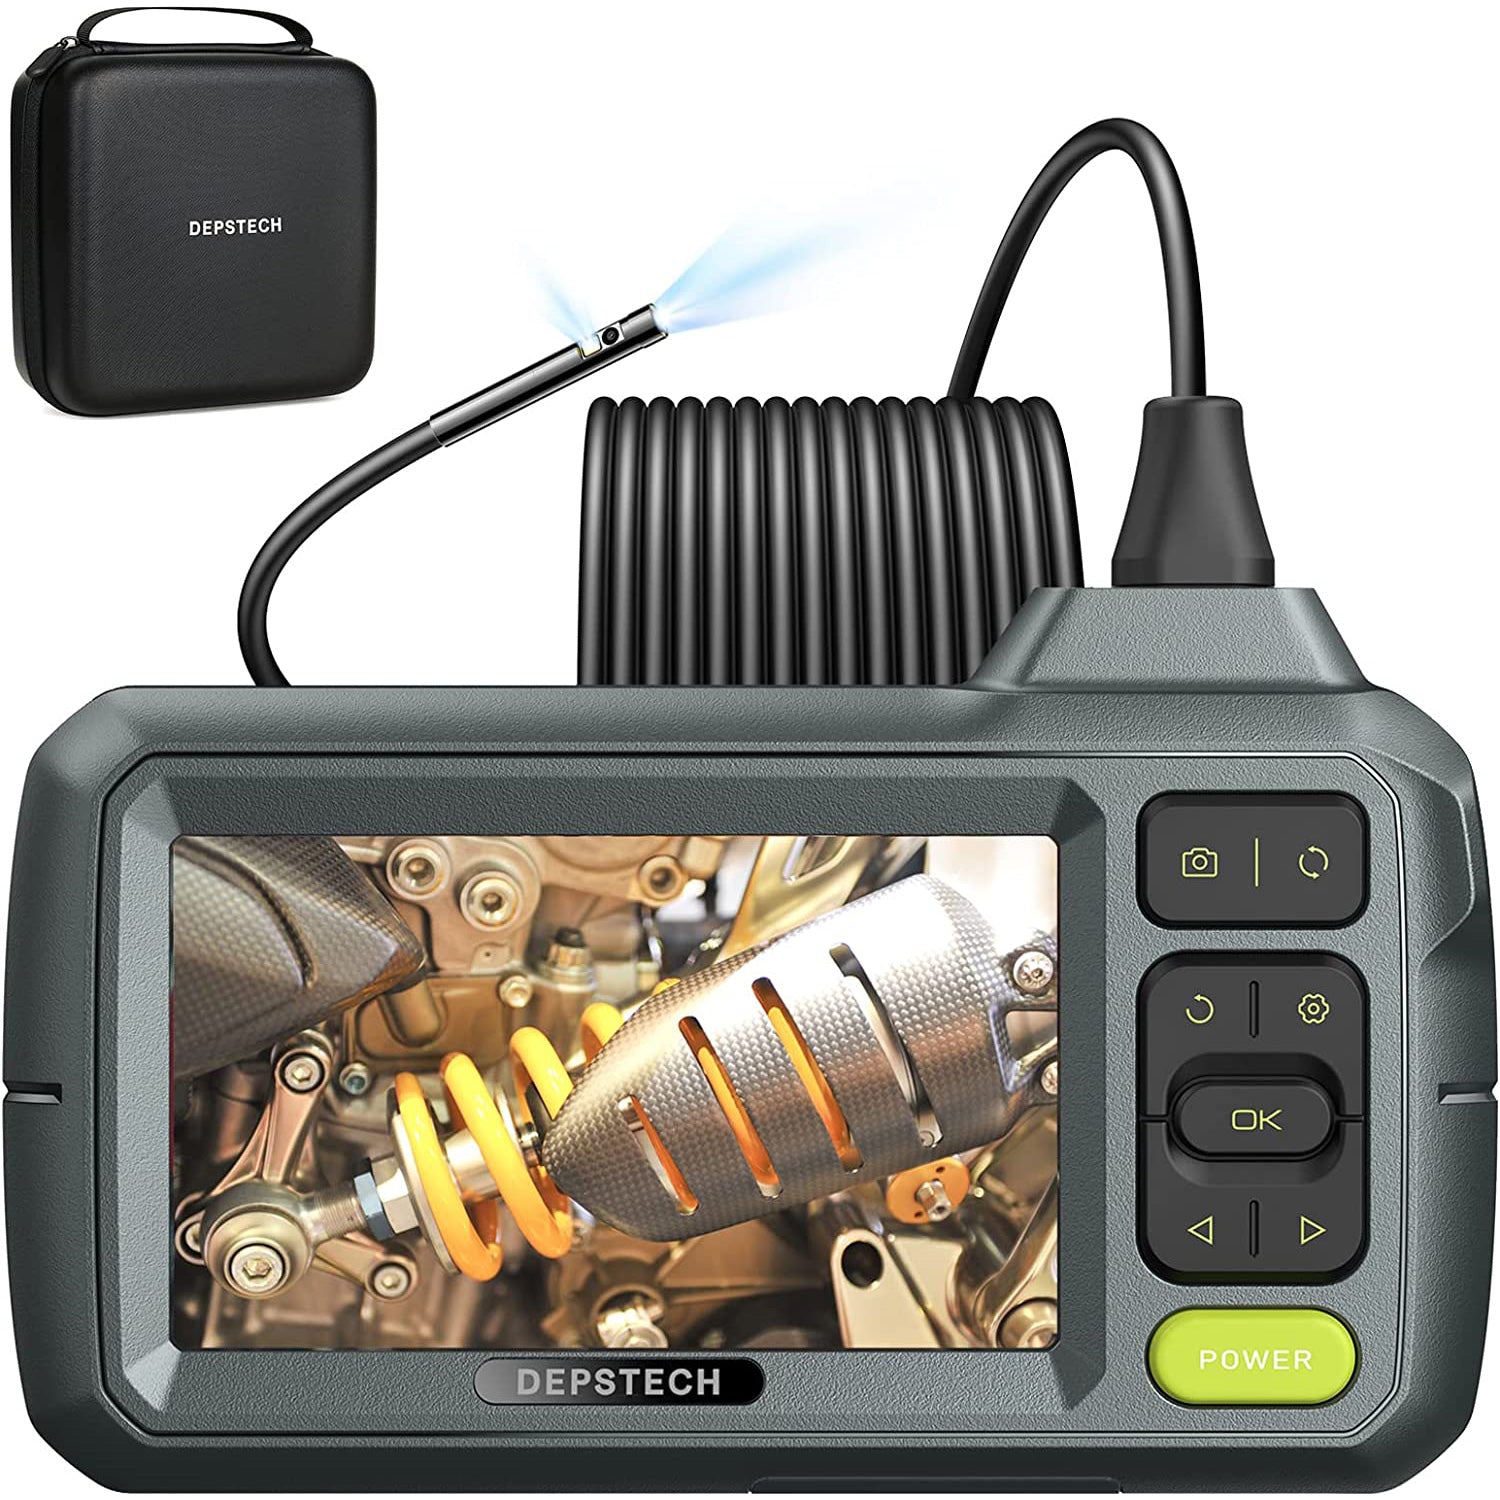 DEPSTECH Wireless Endoscope 1080P 3.9mm Borescope Semi-Rigid Inspection  Camera